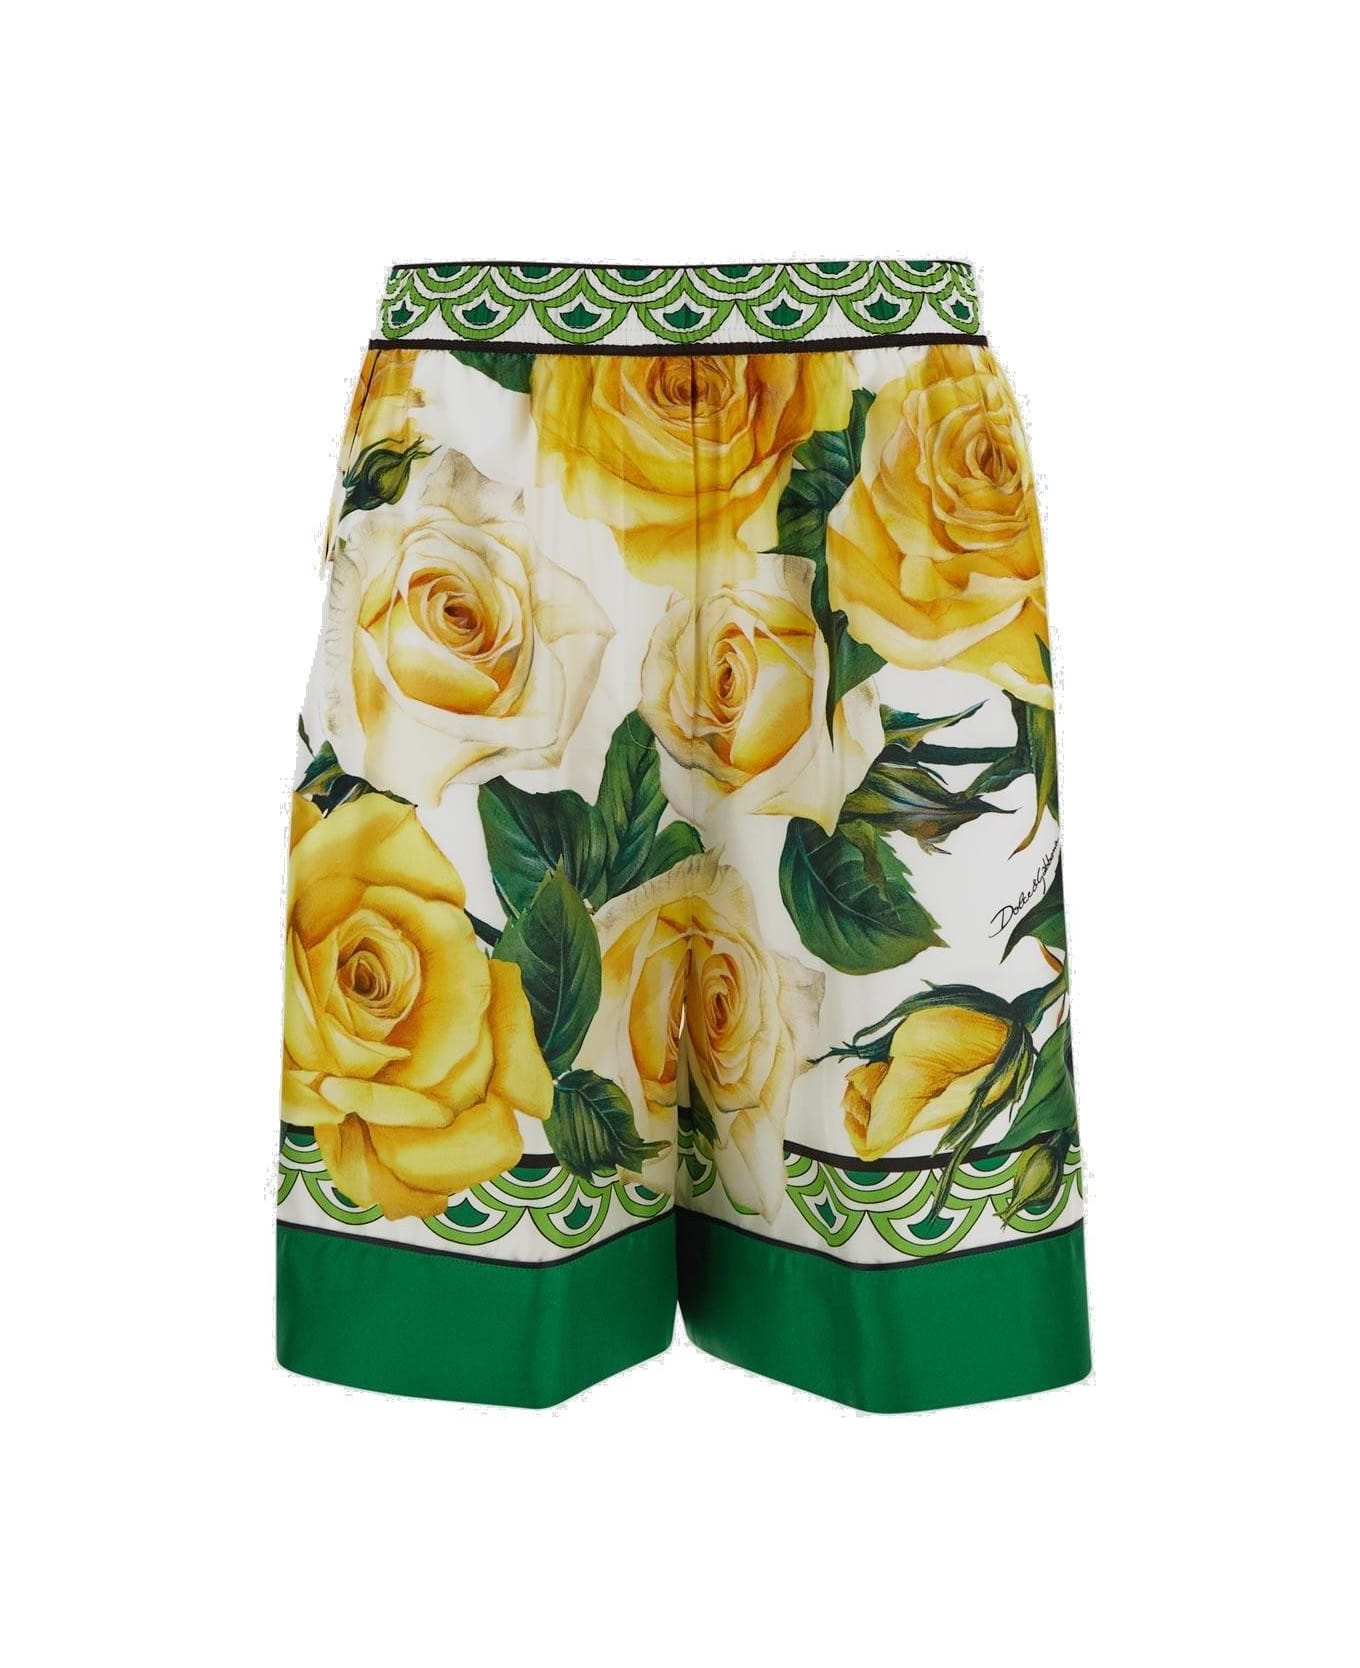 Dolce & Gabbana Floral Printed Shorts - GREEN/YELLOW